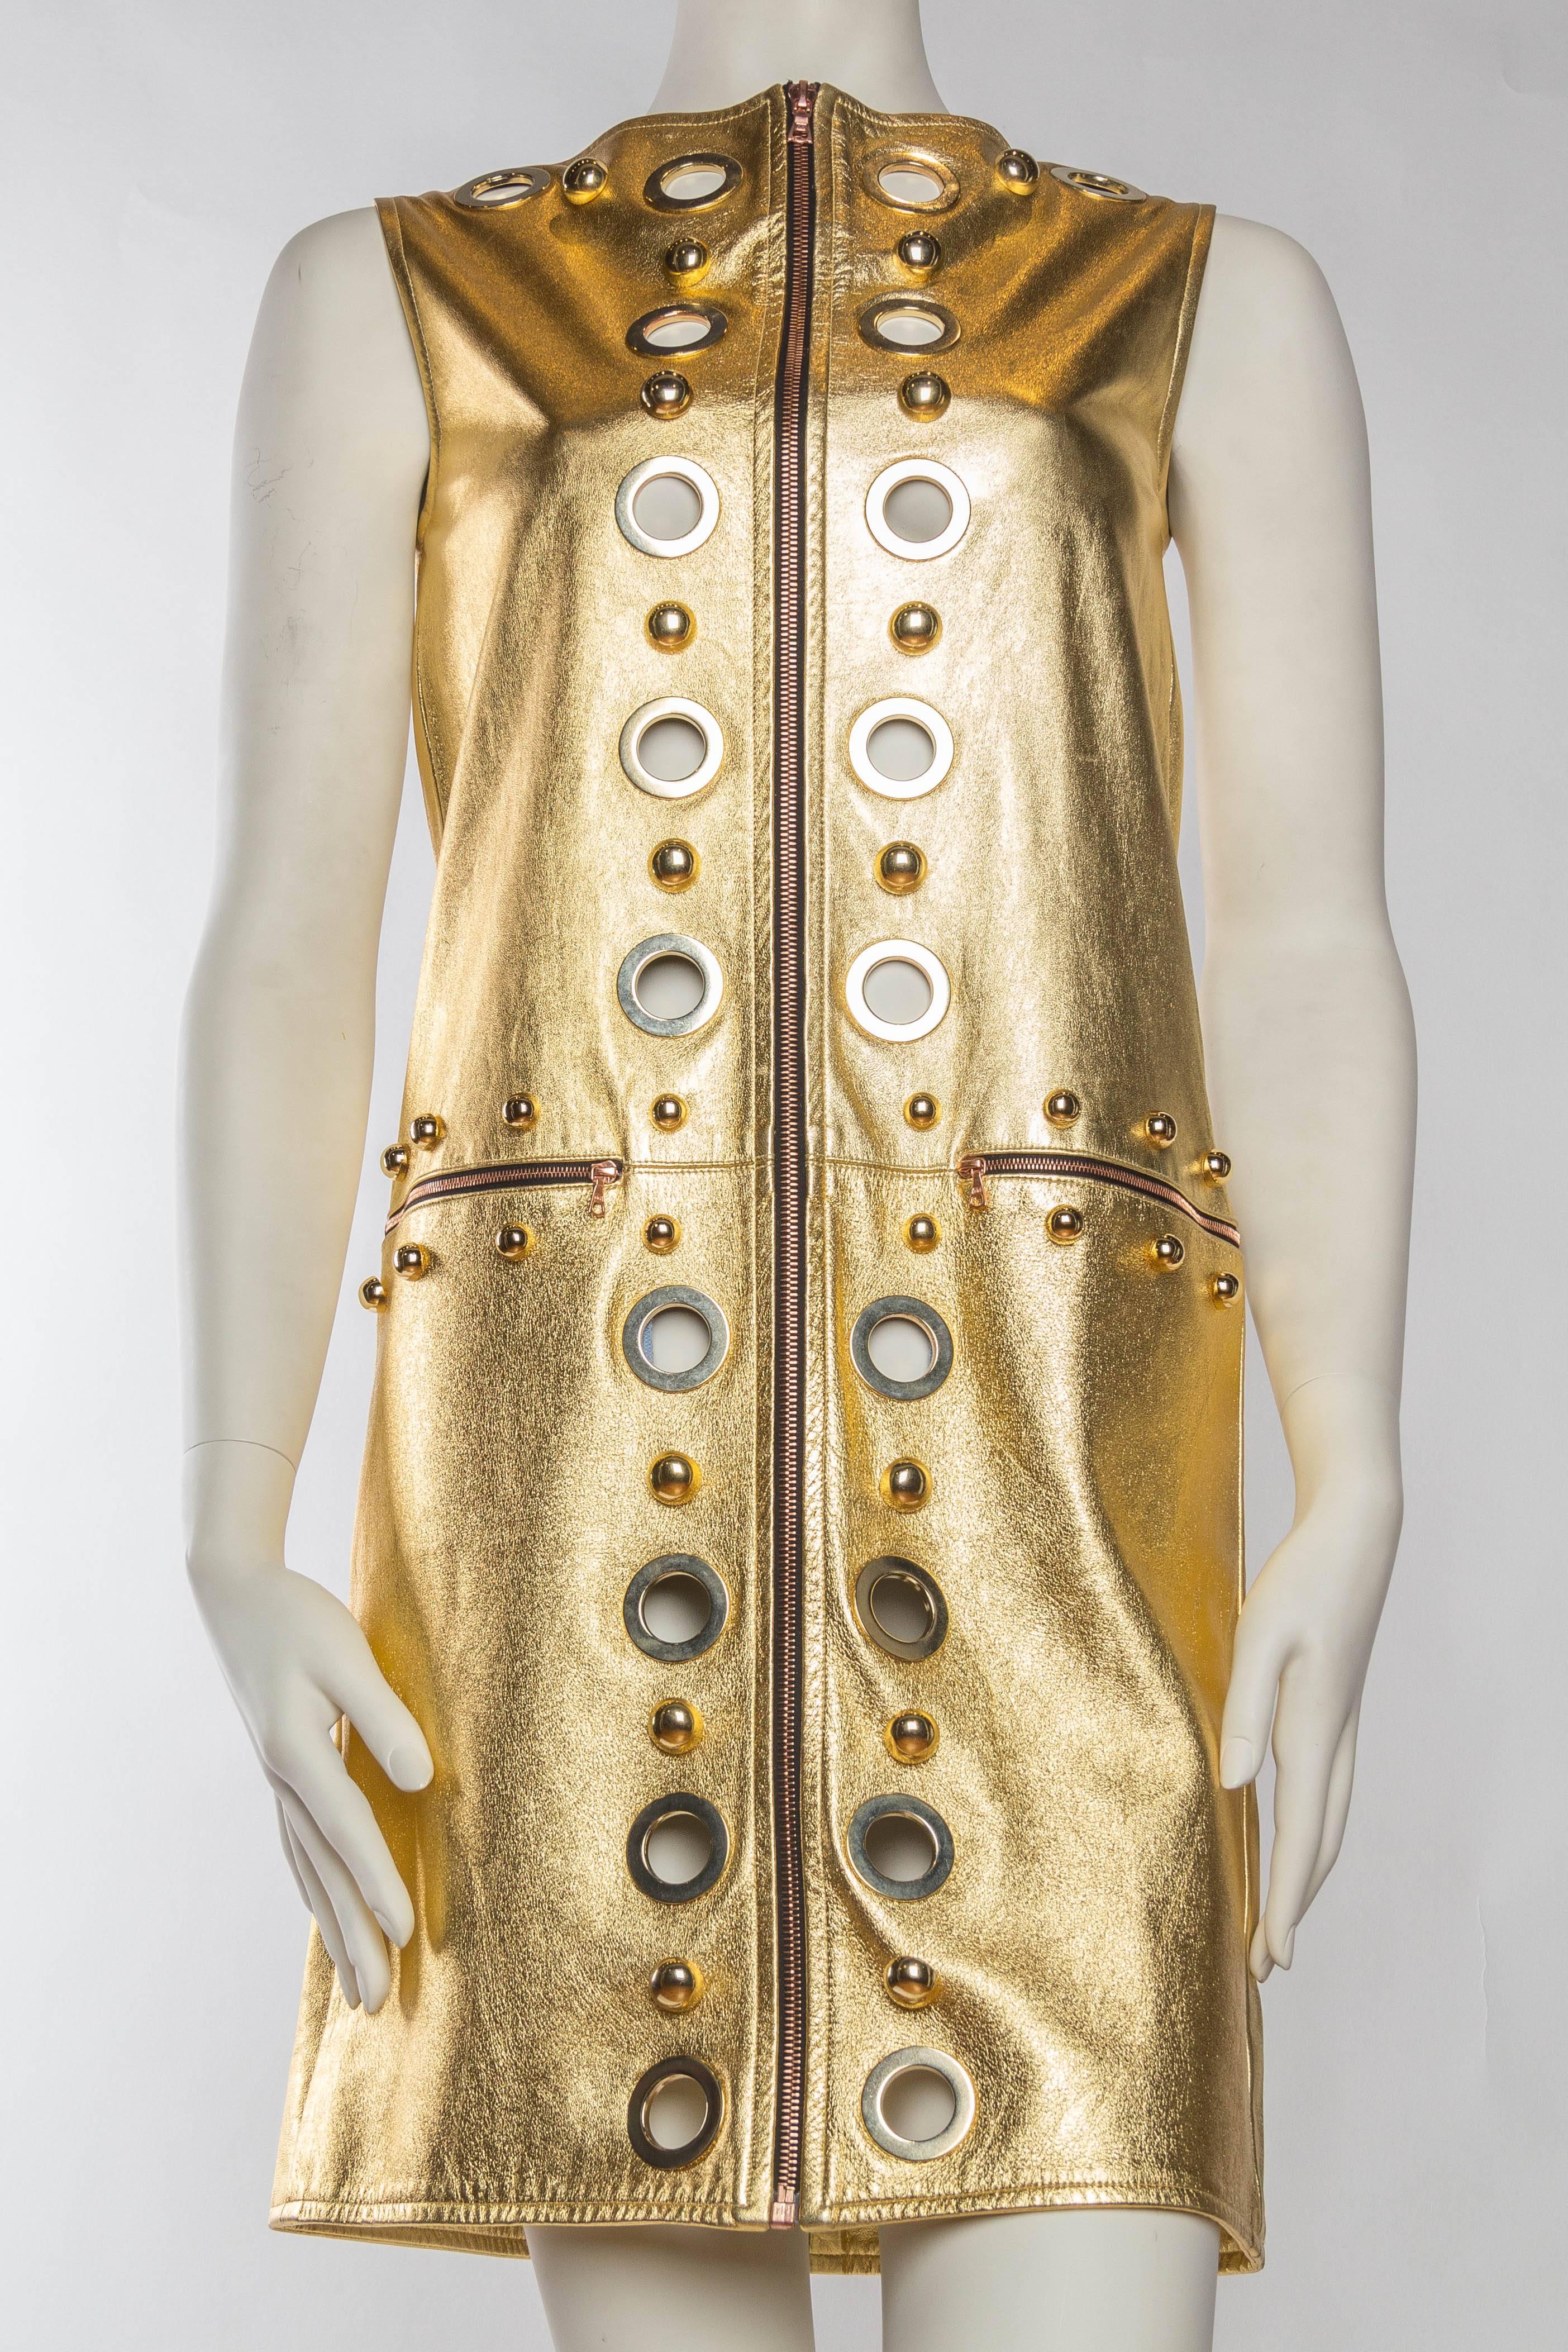 Brown Studded Gold Leather Mod Zipper Dress